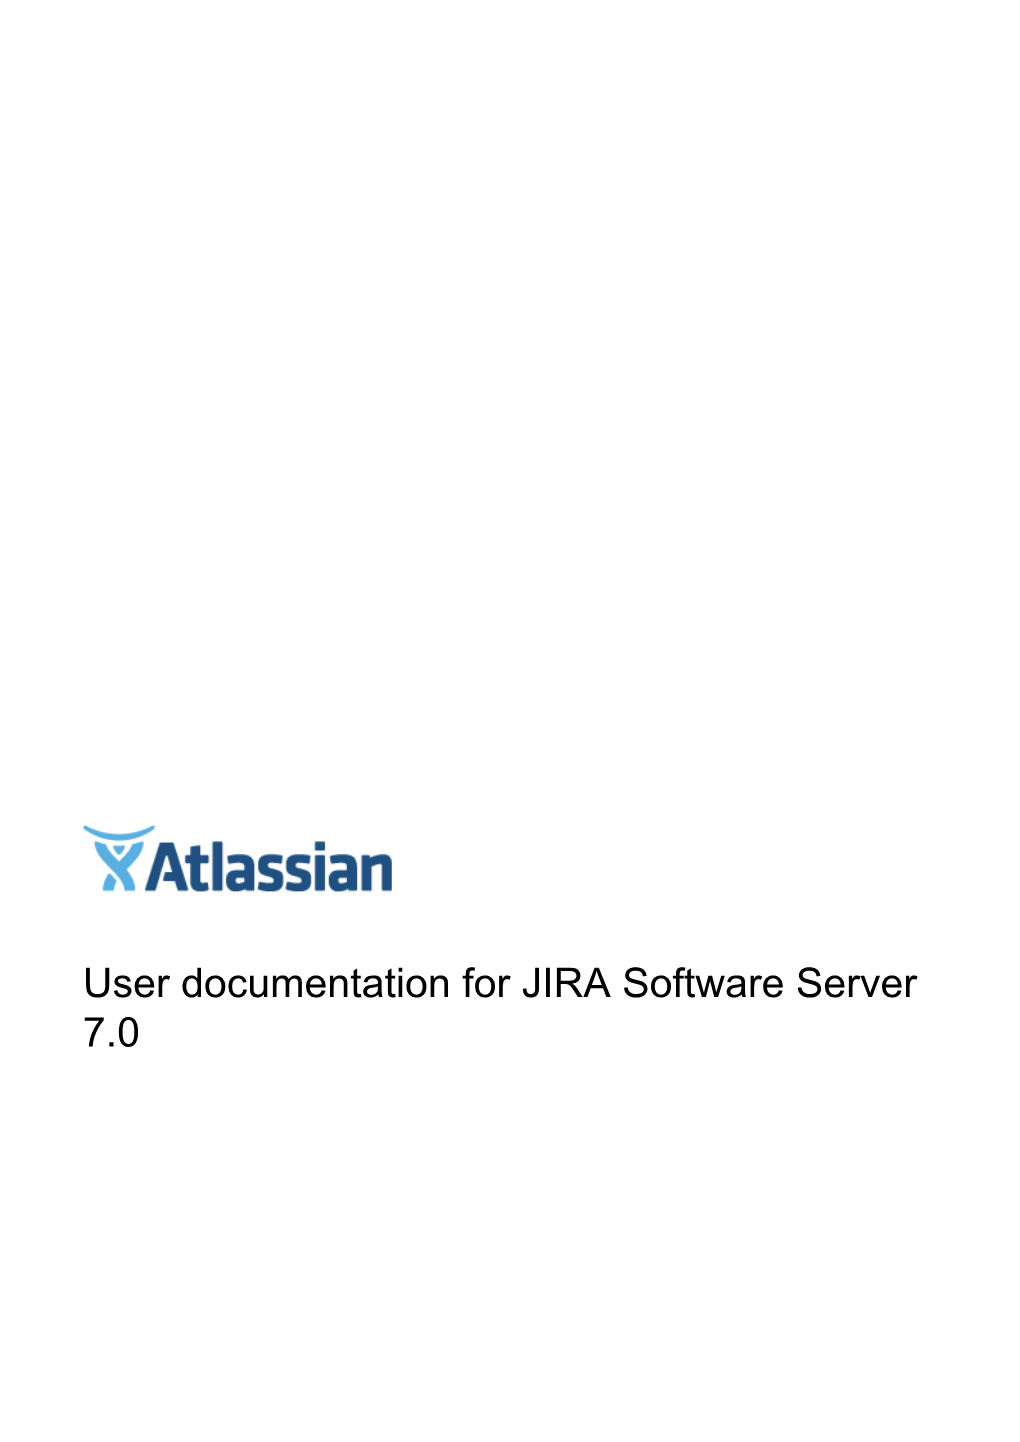 User Documentation for JIRA Software Server 7.0 User Documentation for JIRA Software Server 7.0 2